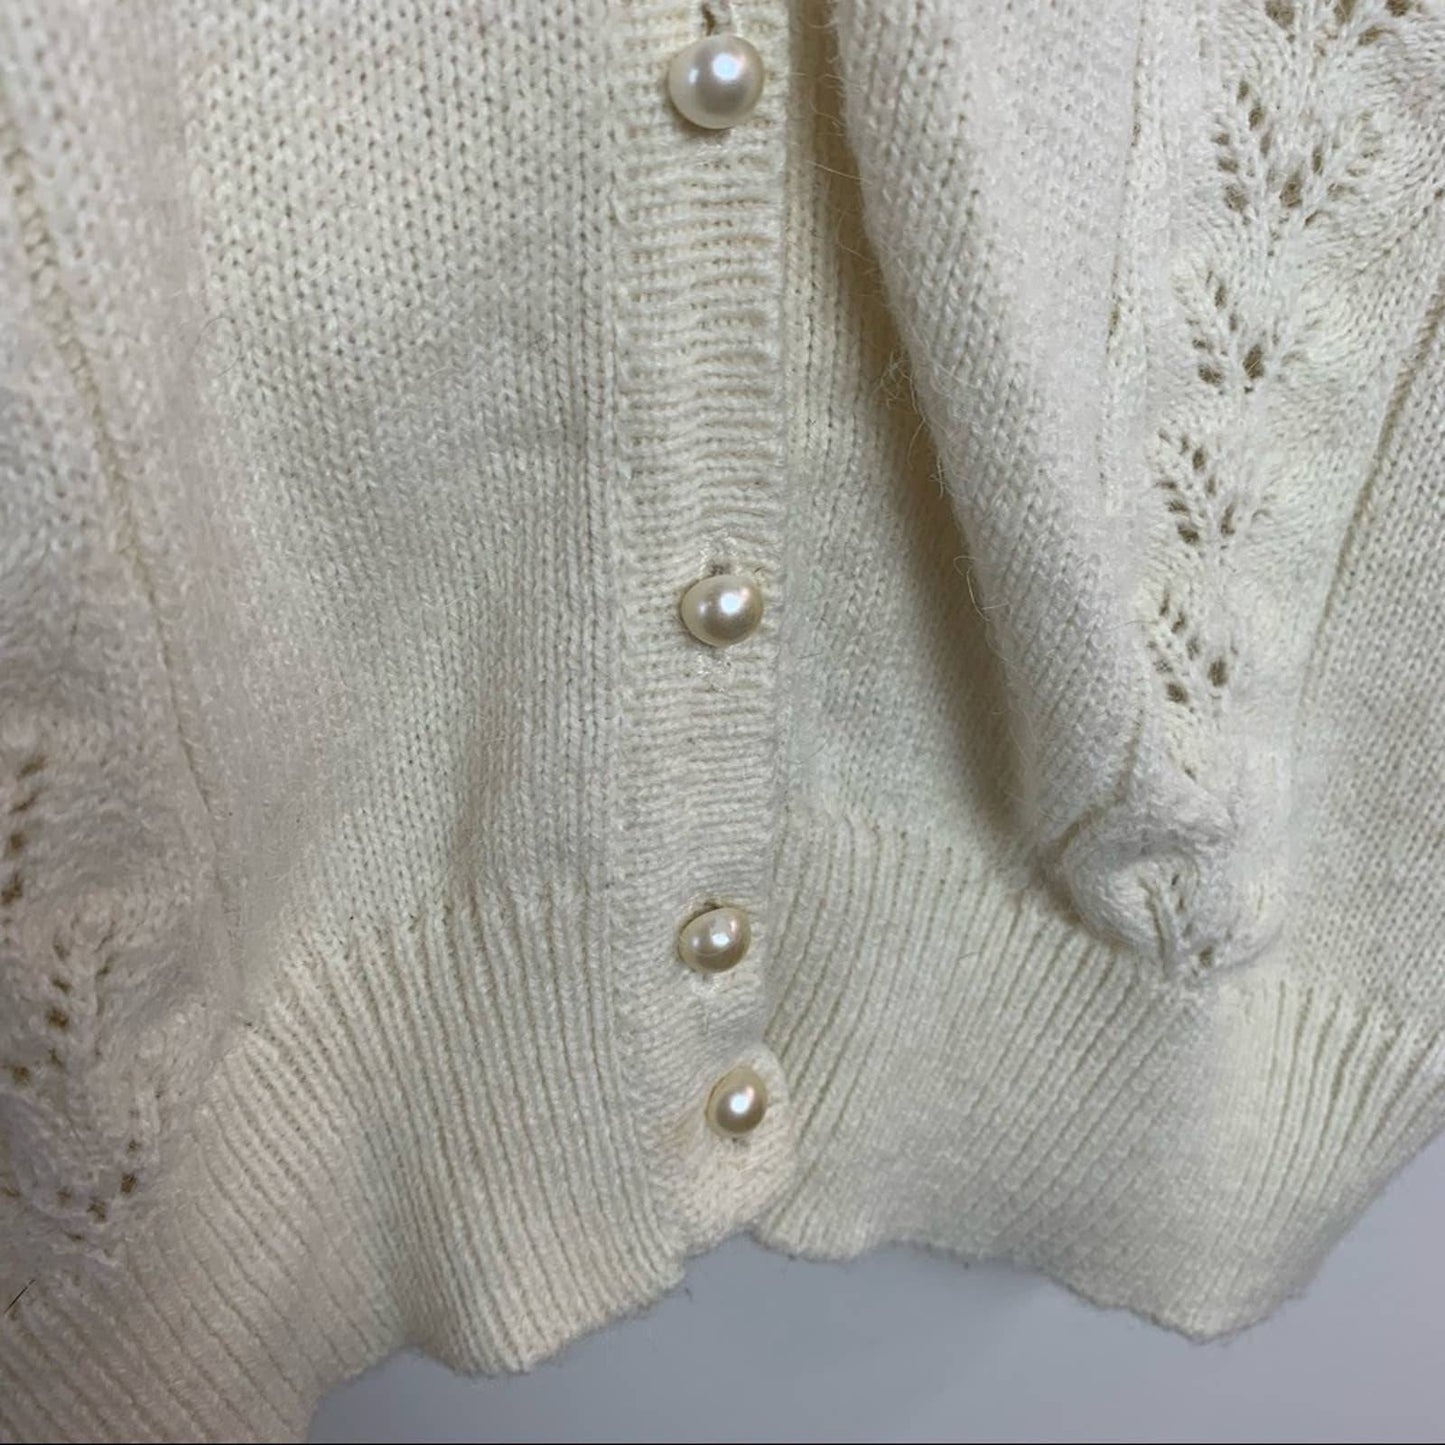 80s Tan F Jay Cream Knit Sweater Vest Pearl Buttons XL Grandpa Academia